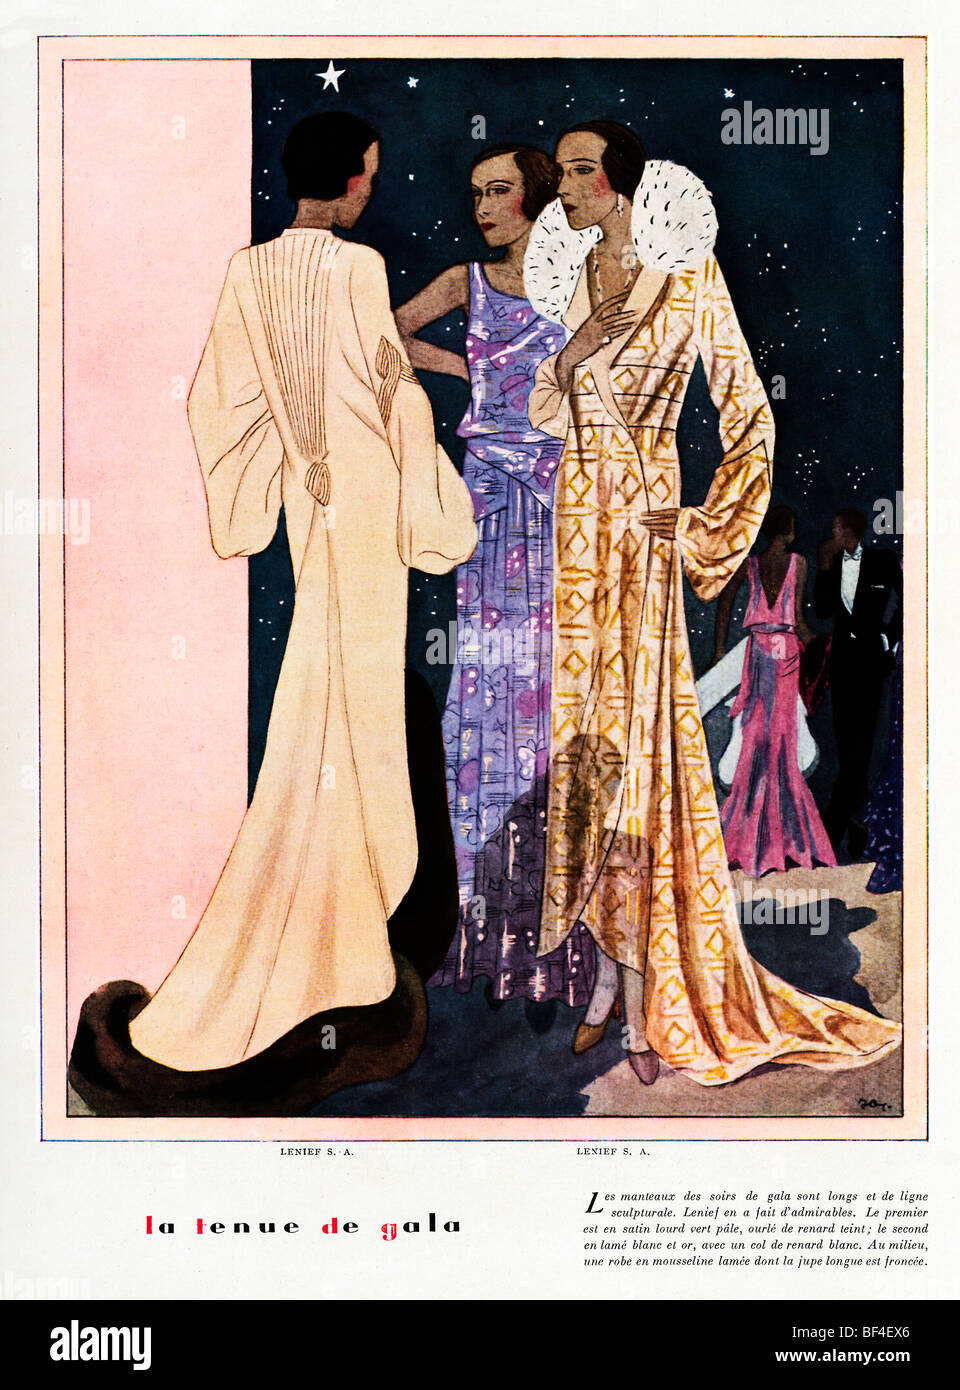 La Tenue De Gala, 1930s French fashion magazine illustration, long elegant evening gowns by Lenief Stock Photo